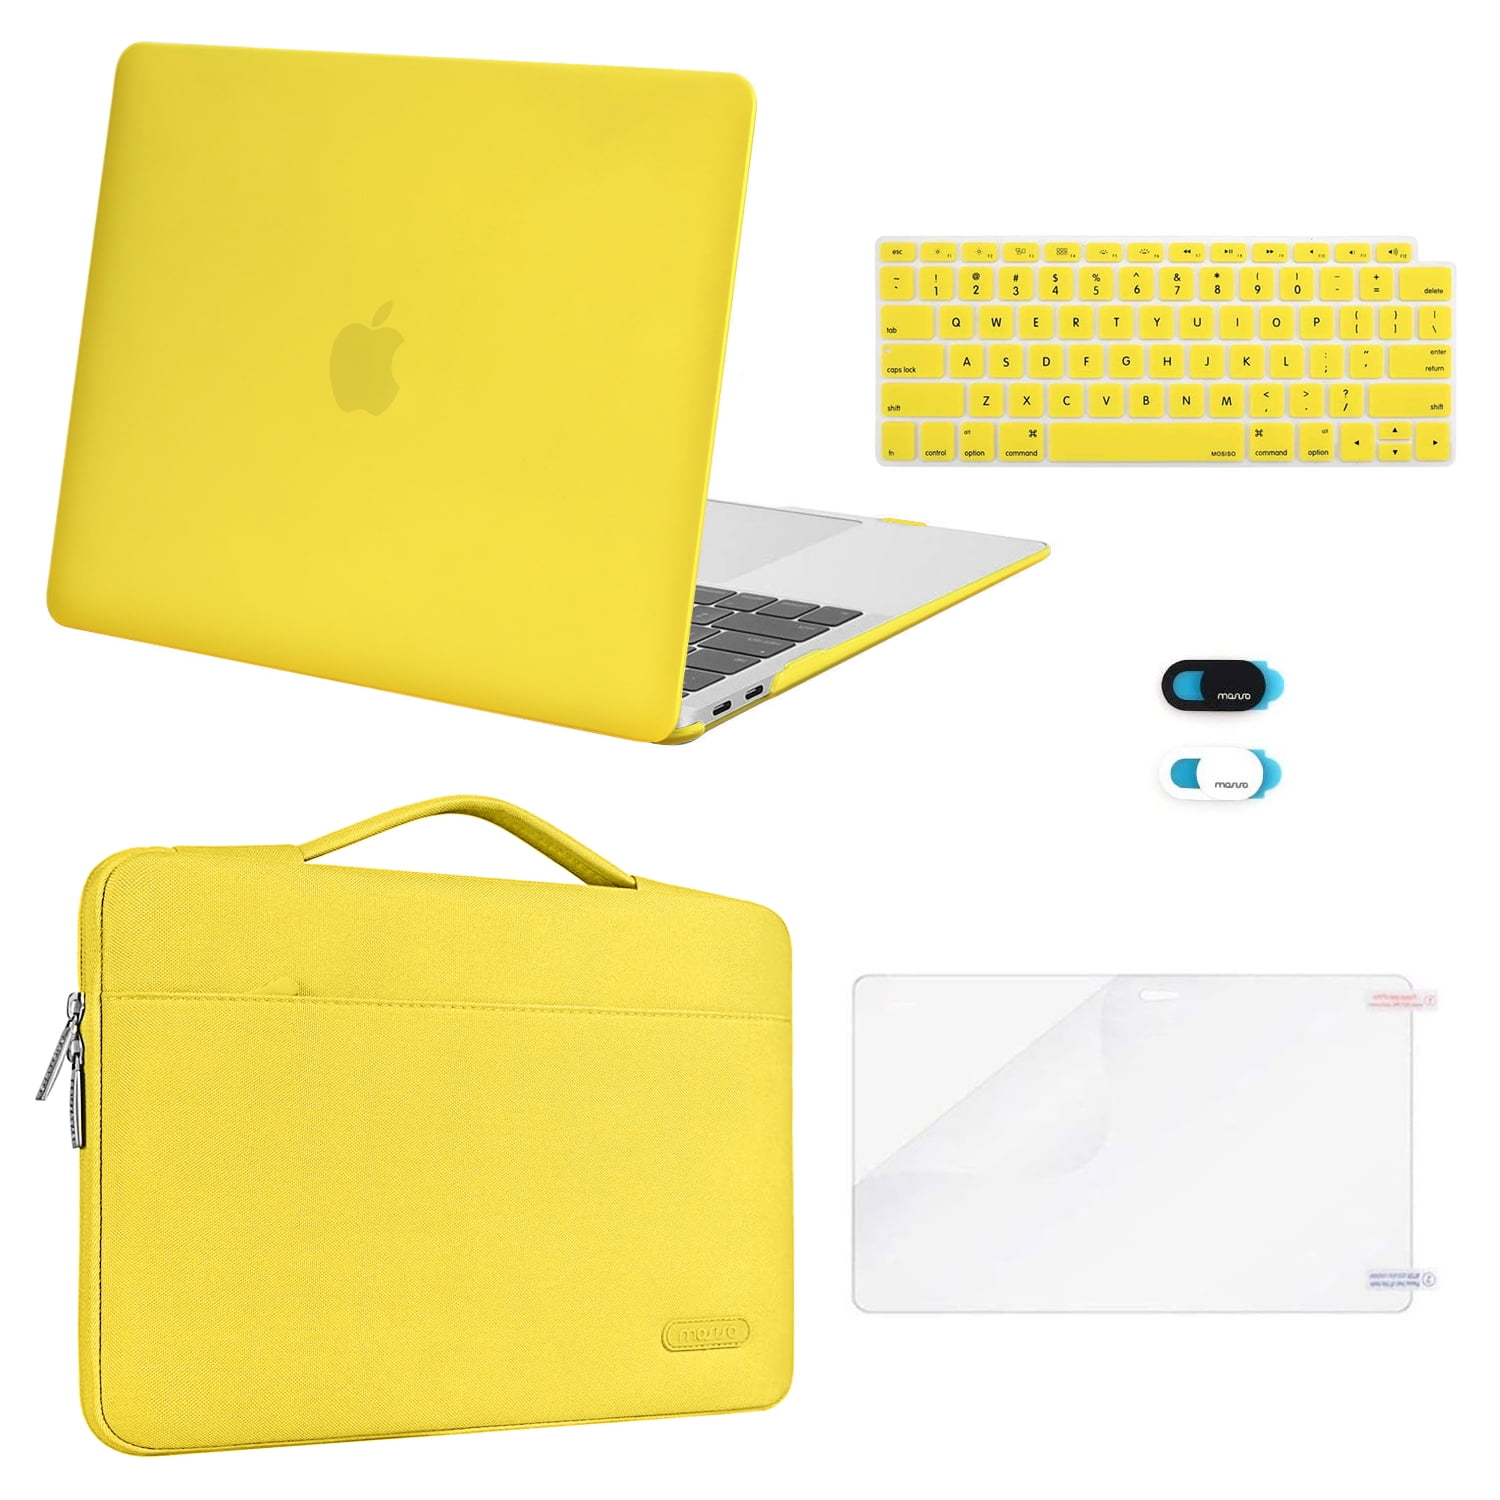 Macbook case 13 inch Macbook Pro case Macbook Air Macbook Pro 13 Macbook Air Macbook sleeve Macbook case Laptop sleeve